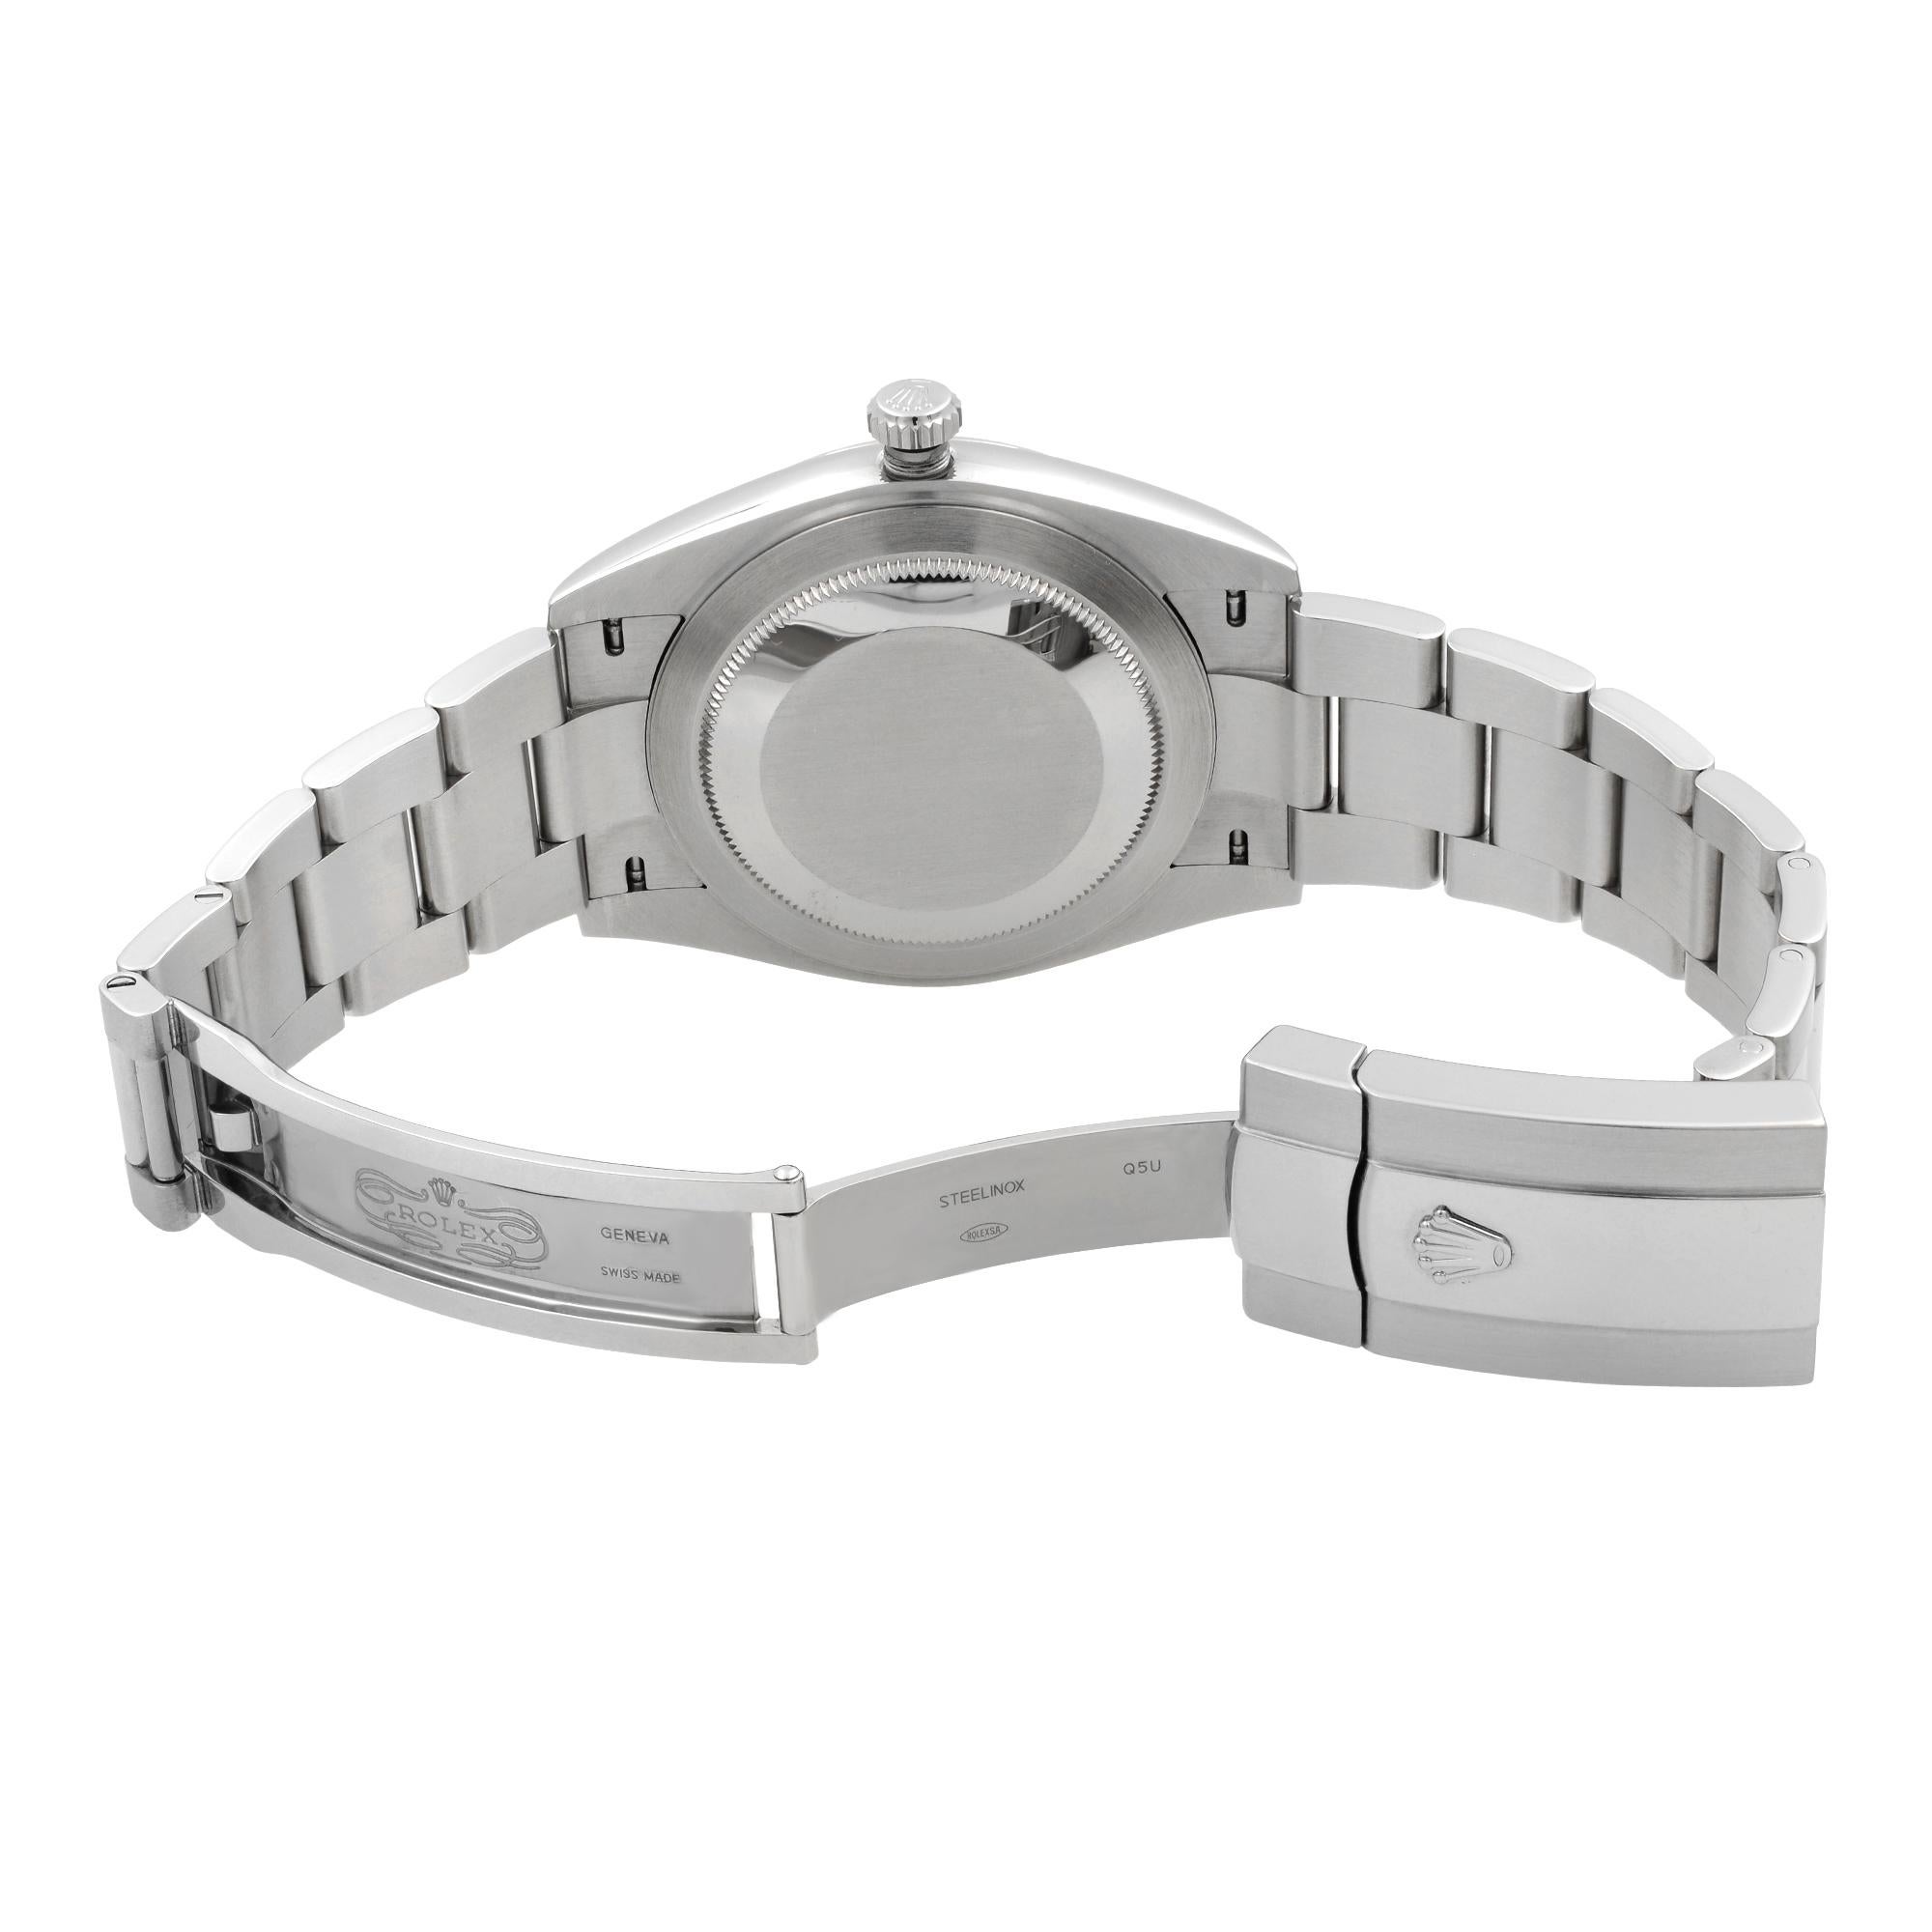 Rolex Datejust II Steel 18k White Gold Blue Dial Automatic Men's Watch 116334 1